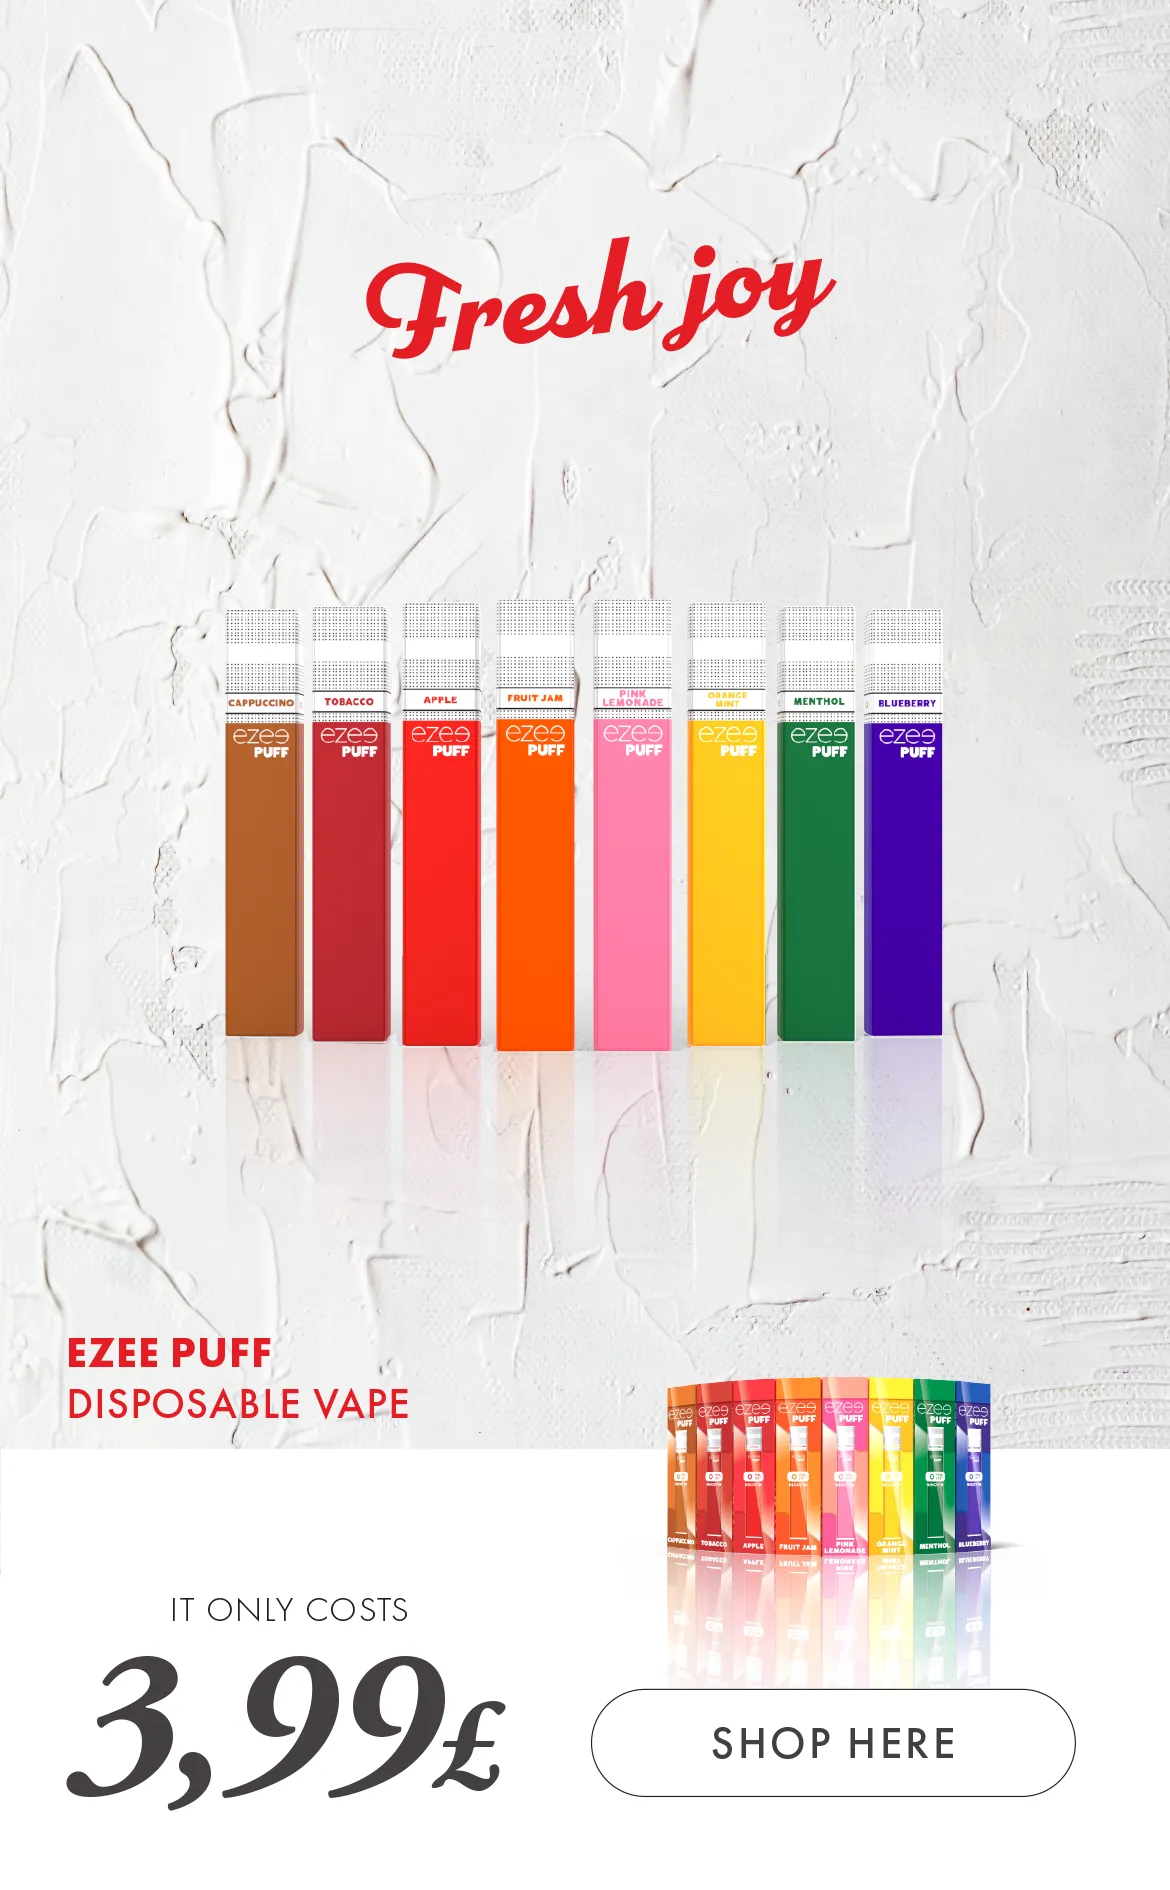 ezee puff disposable vape e-cigarette 300 puff nicotine free